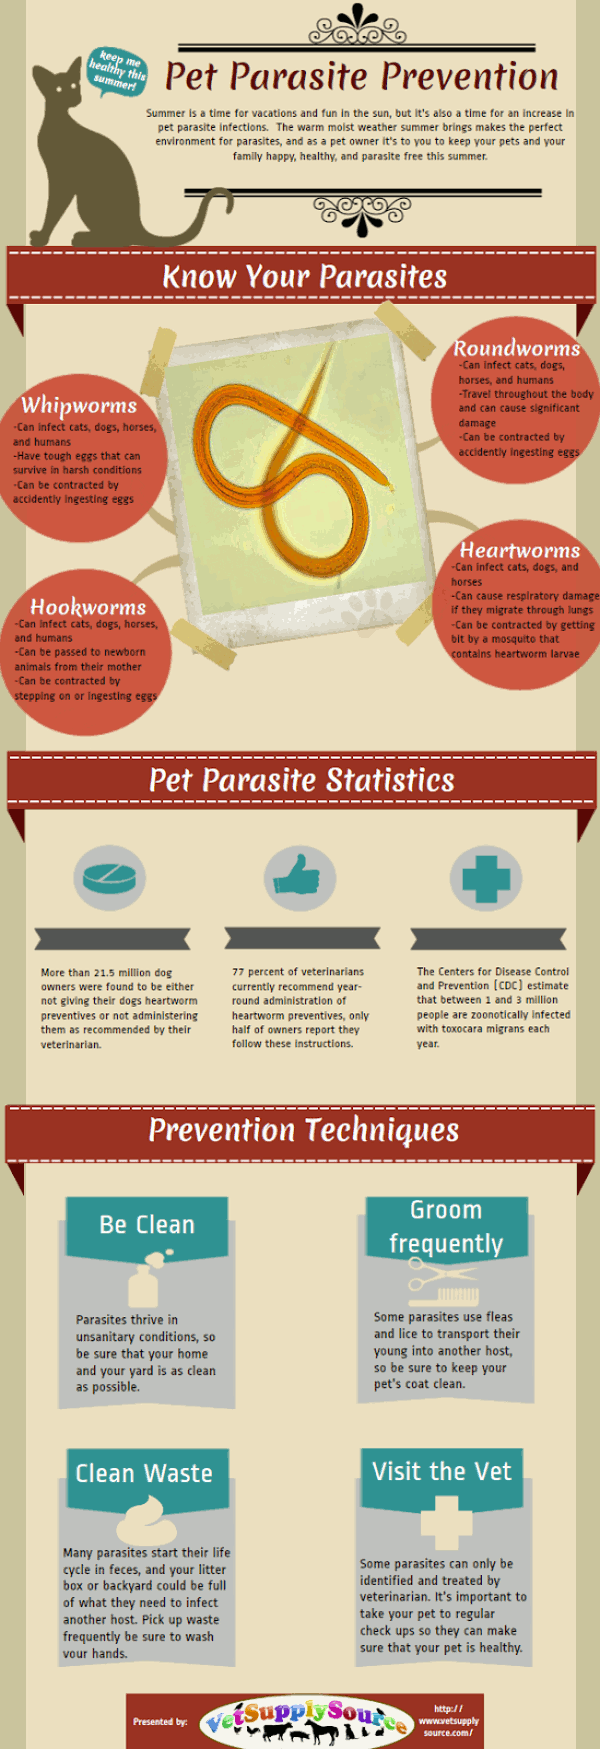 Pet Parasite Prevention